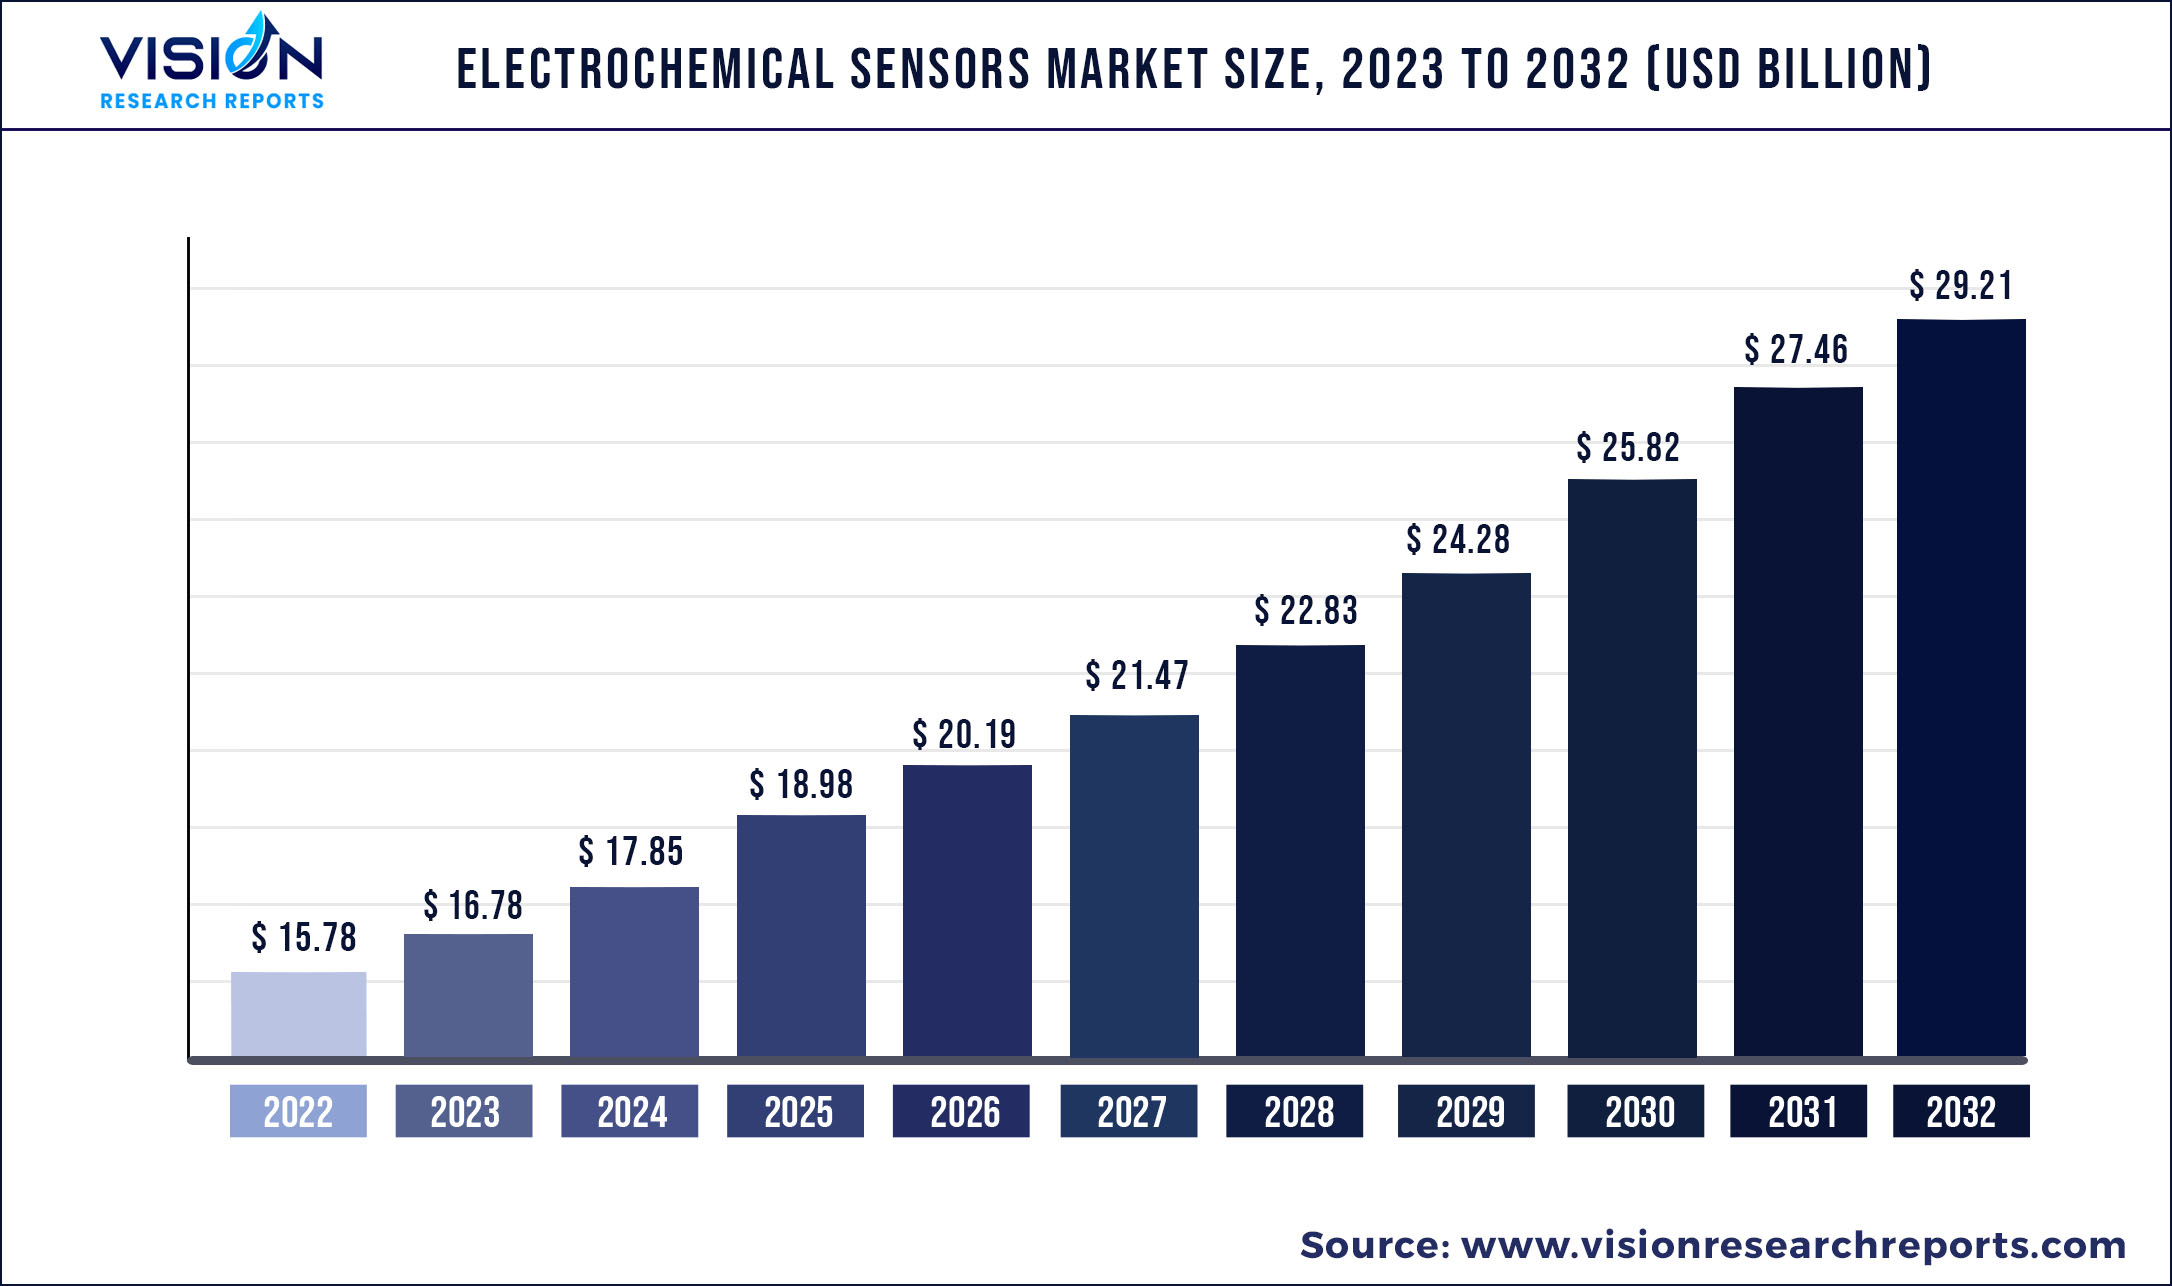 Electrochemical Sensors Market Size 2023 to 2032